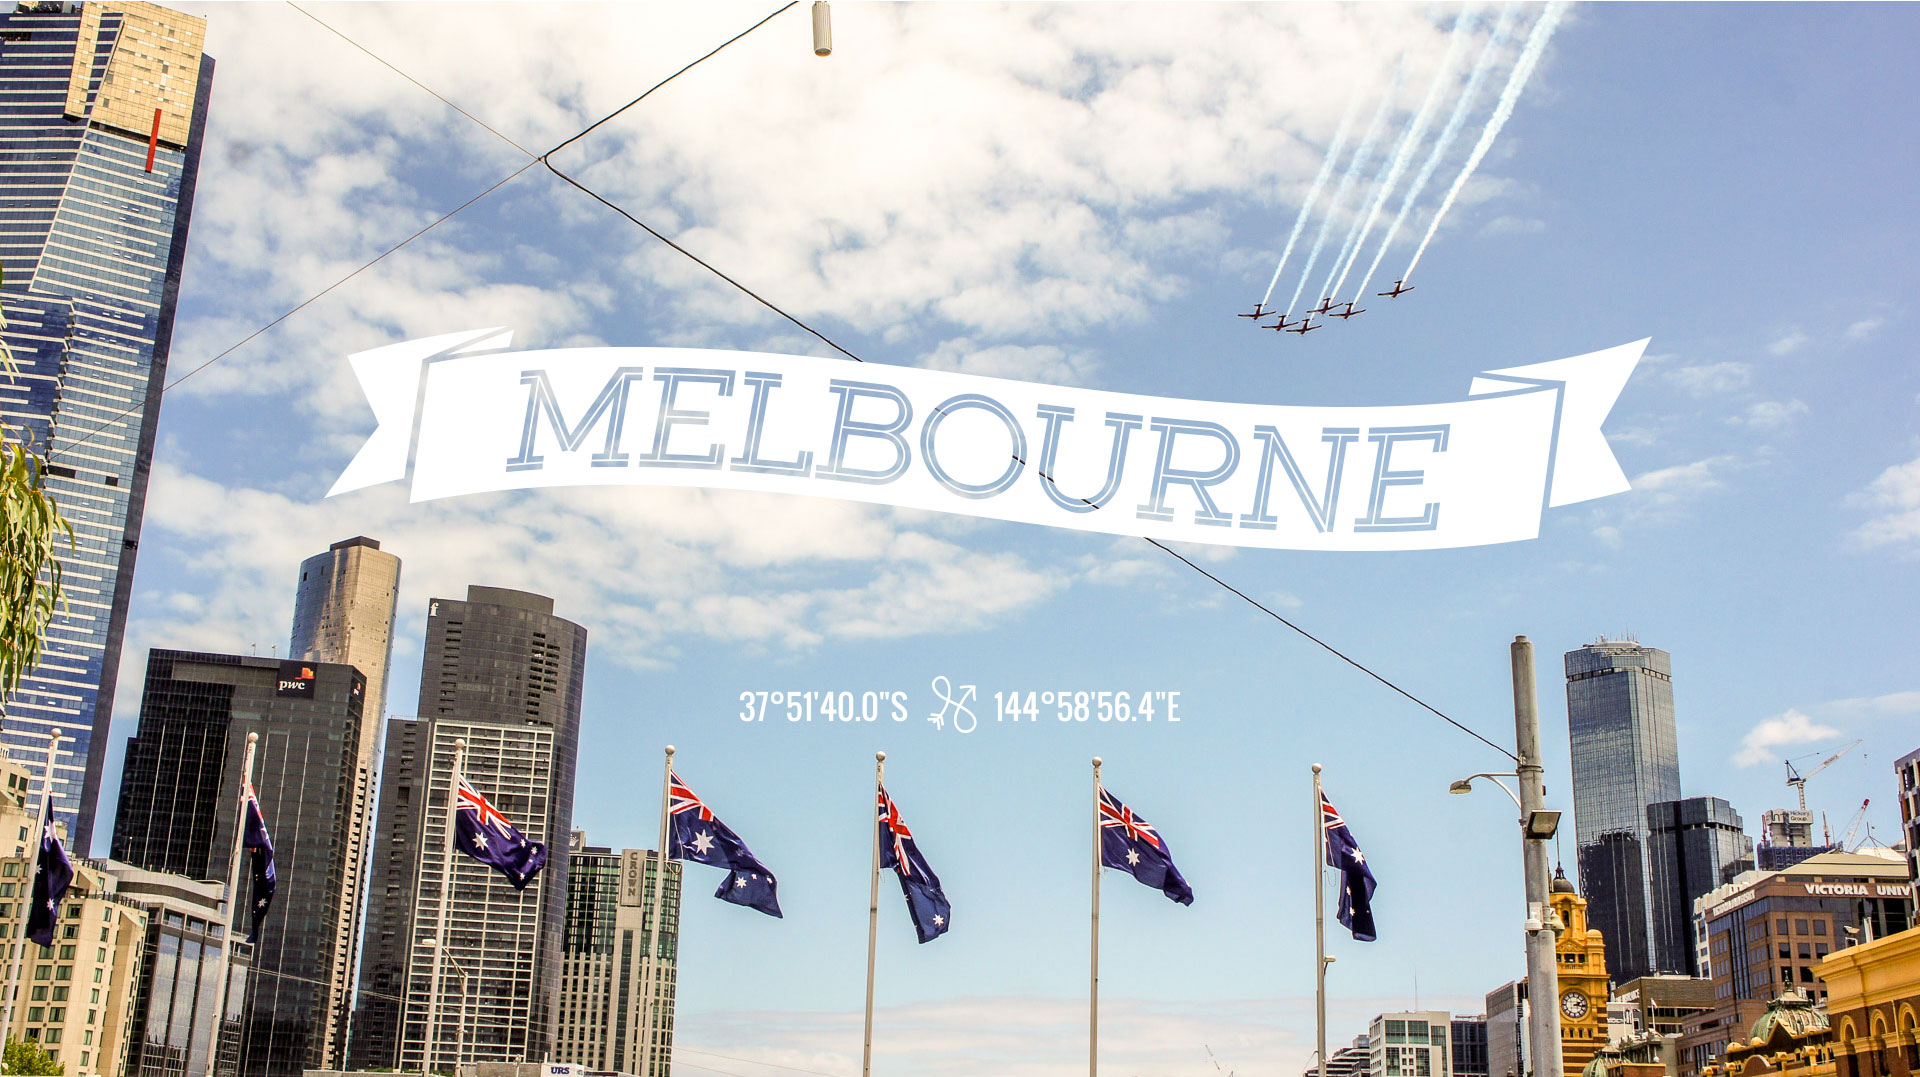 Melbourne - traelbooks >> KEEP DRIFTING - way of travel